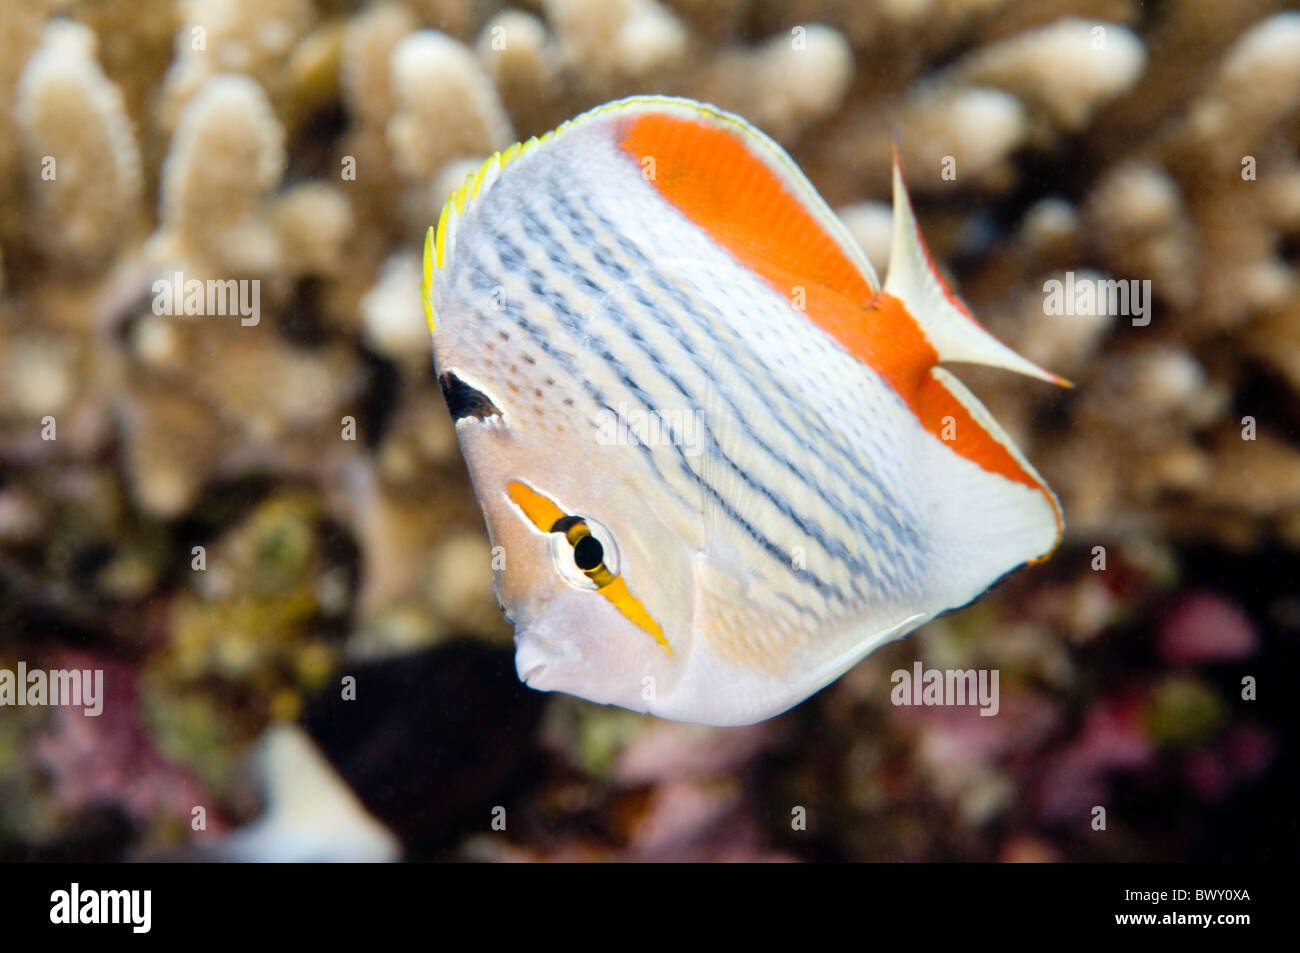 Crown butterflyfish Chaetodon-paucifasciatus Stock Photo